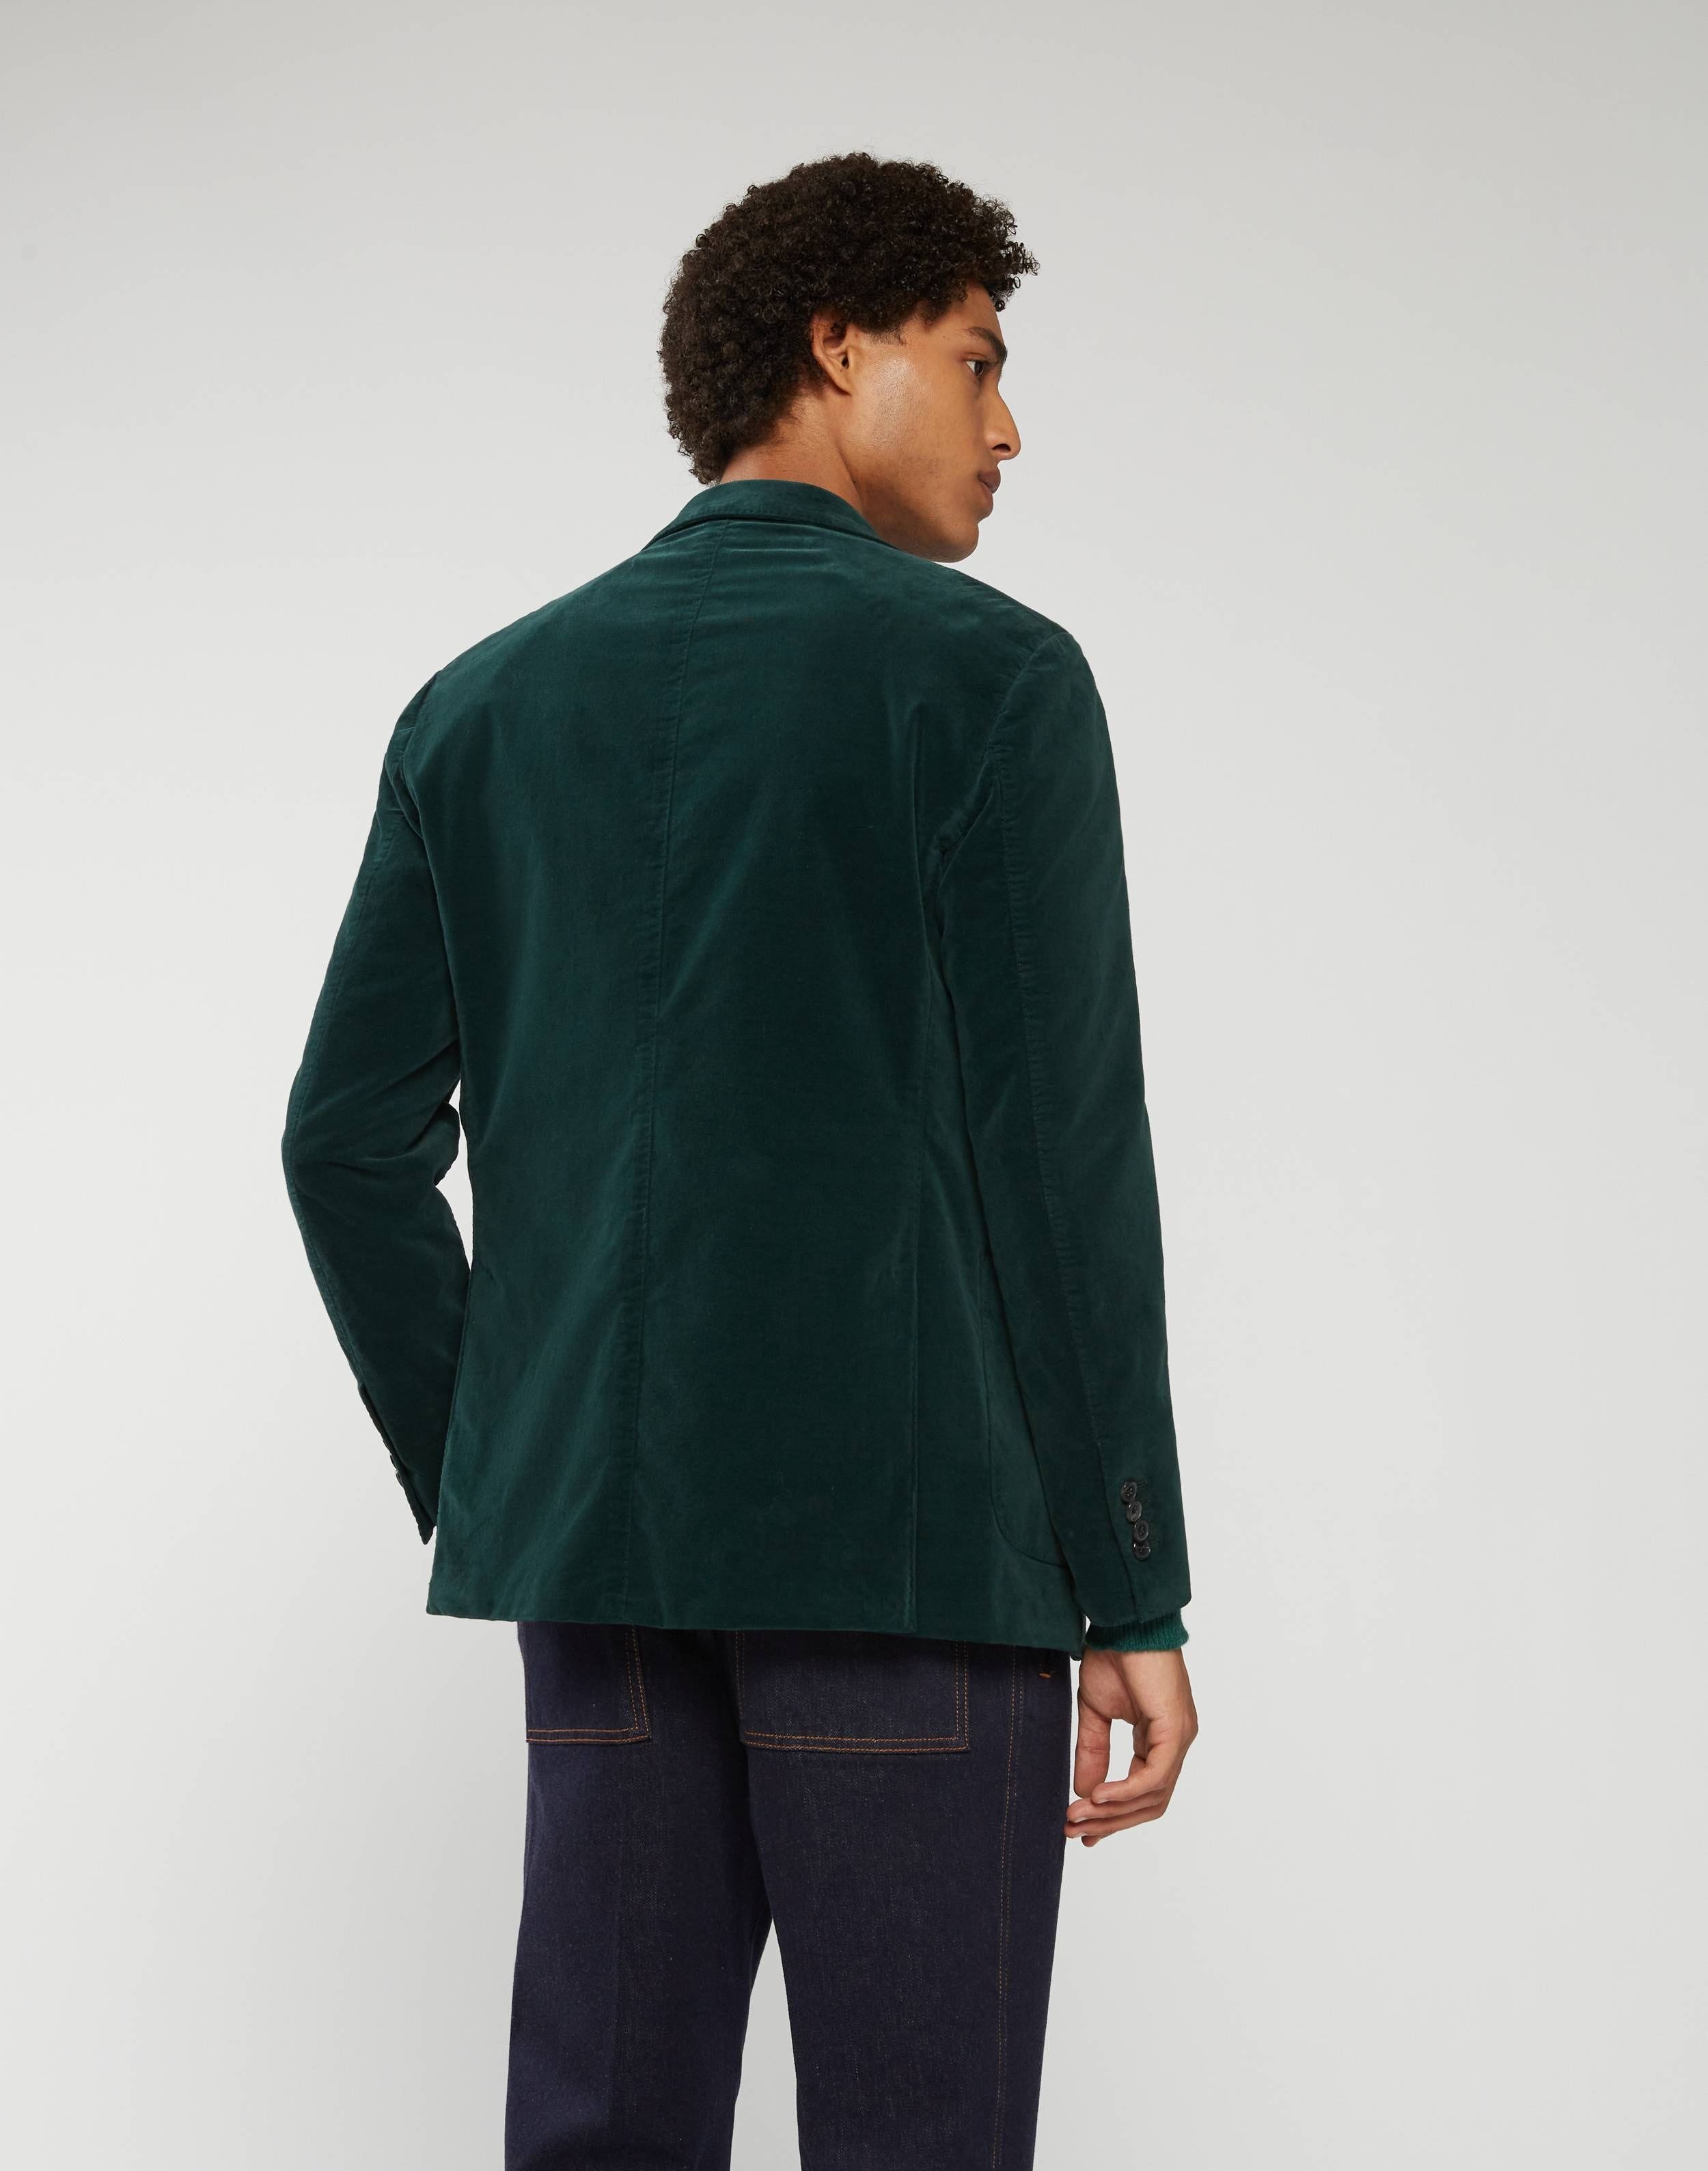 Jacket in stretchy green velvet - Supersoft 